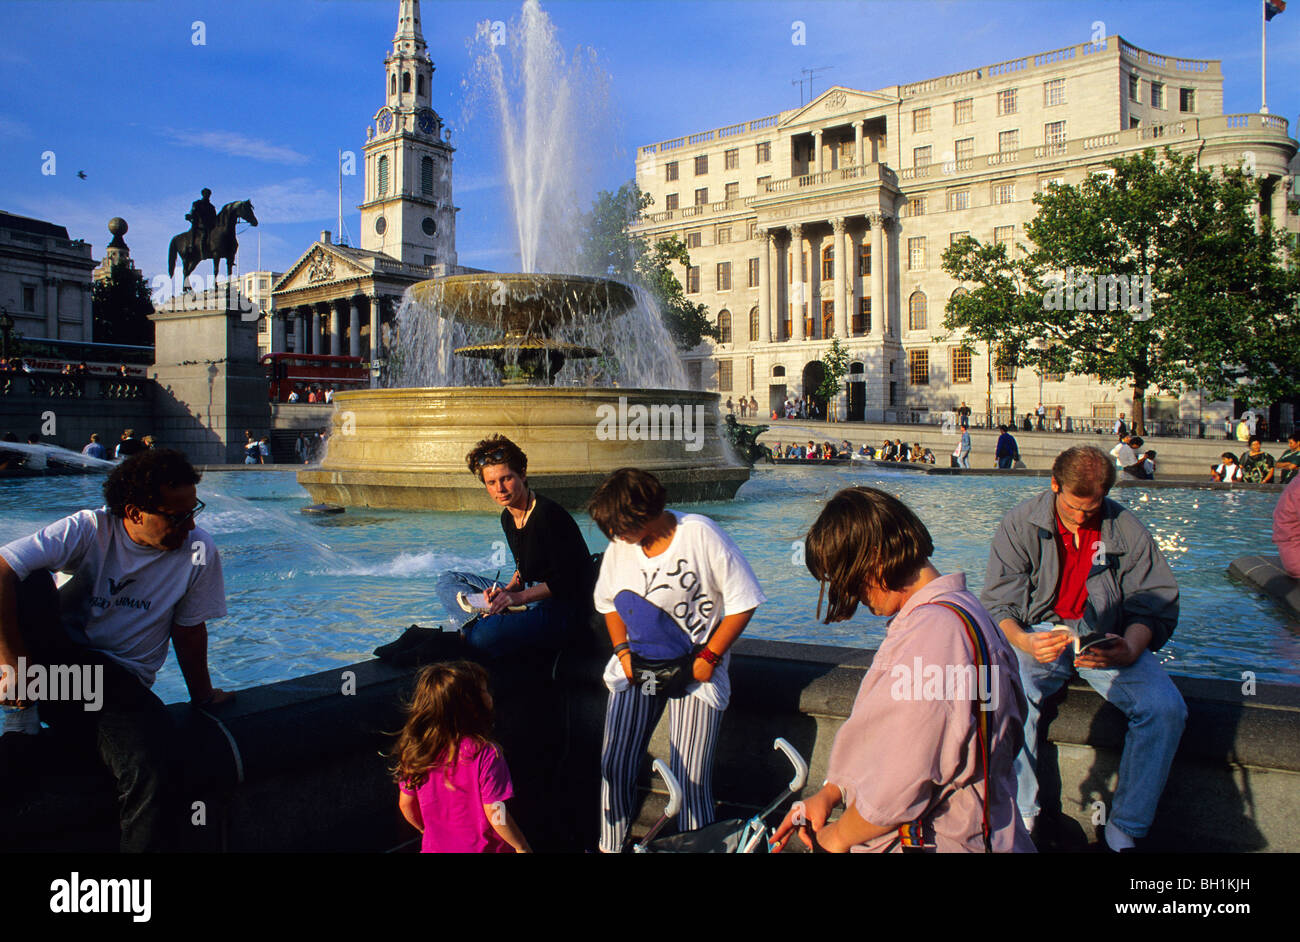 Europe, Great Britain, England, London, Trafalgar Square on a summer day Stock Photo